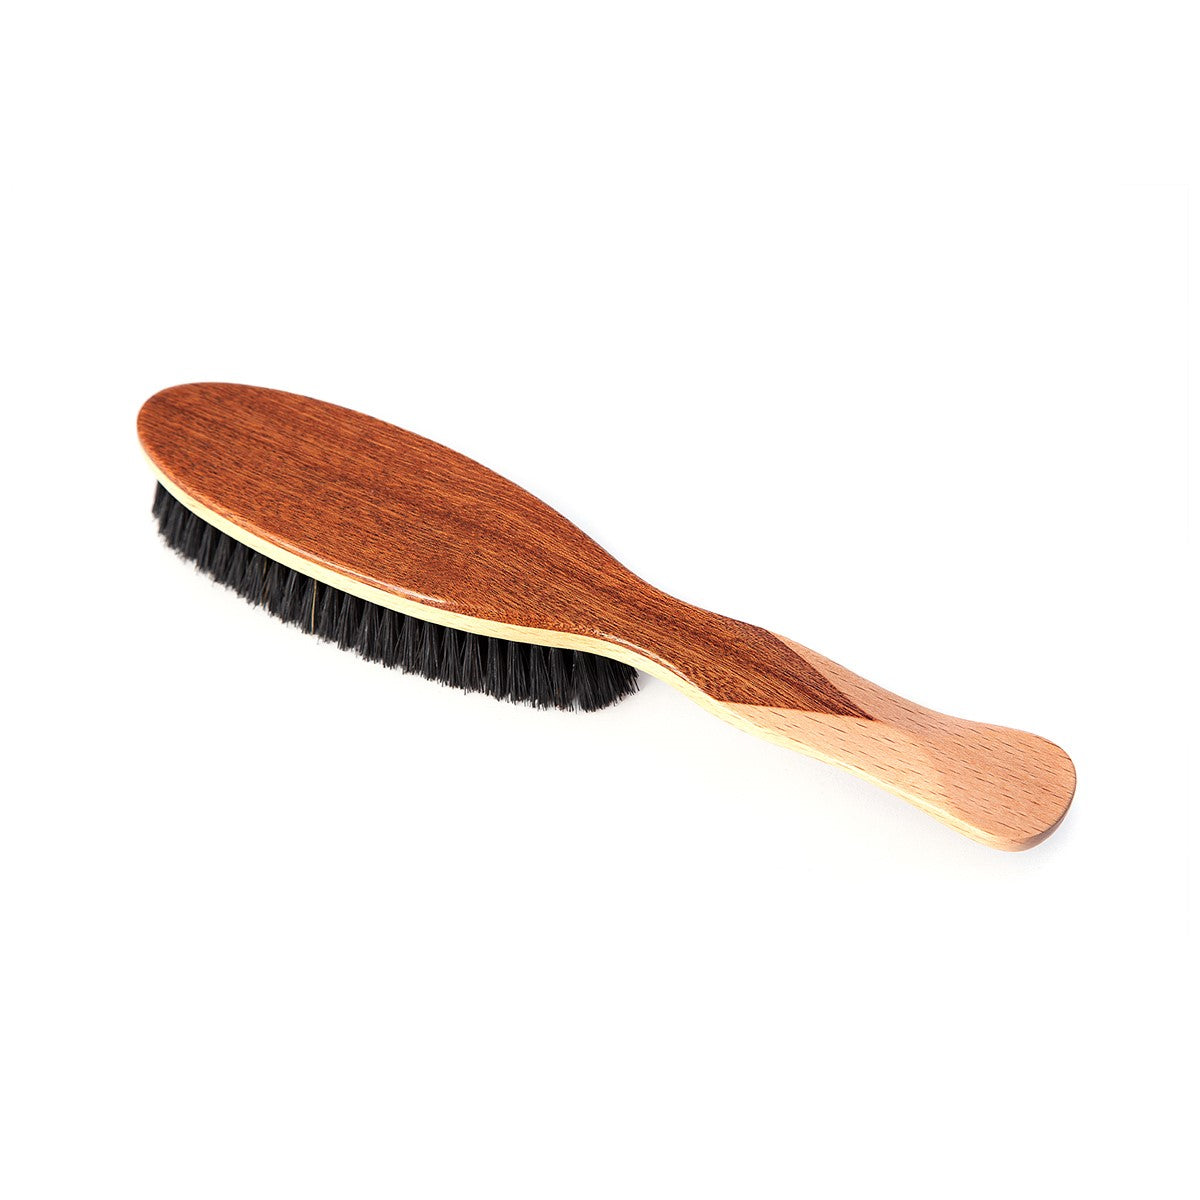 Danta/Beech Wood Clothes Brush